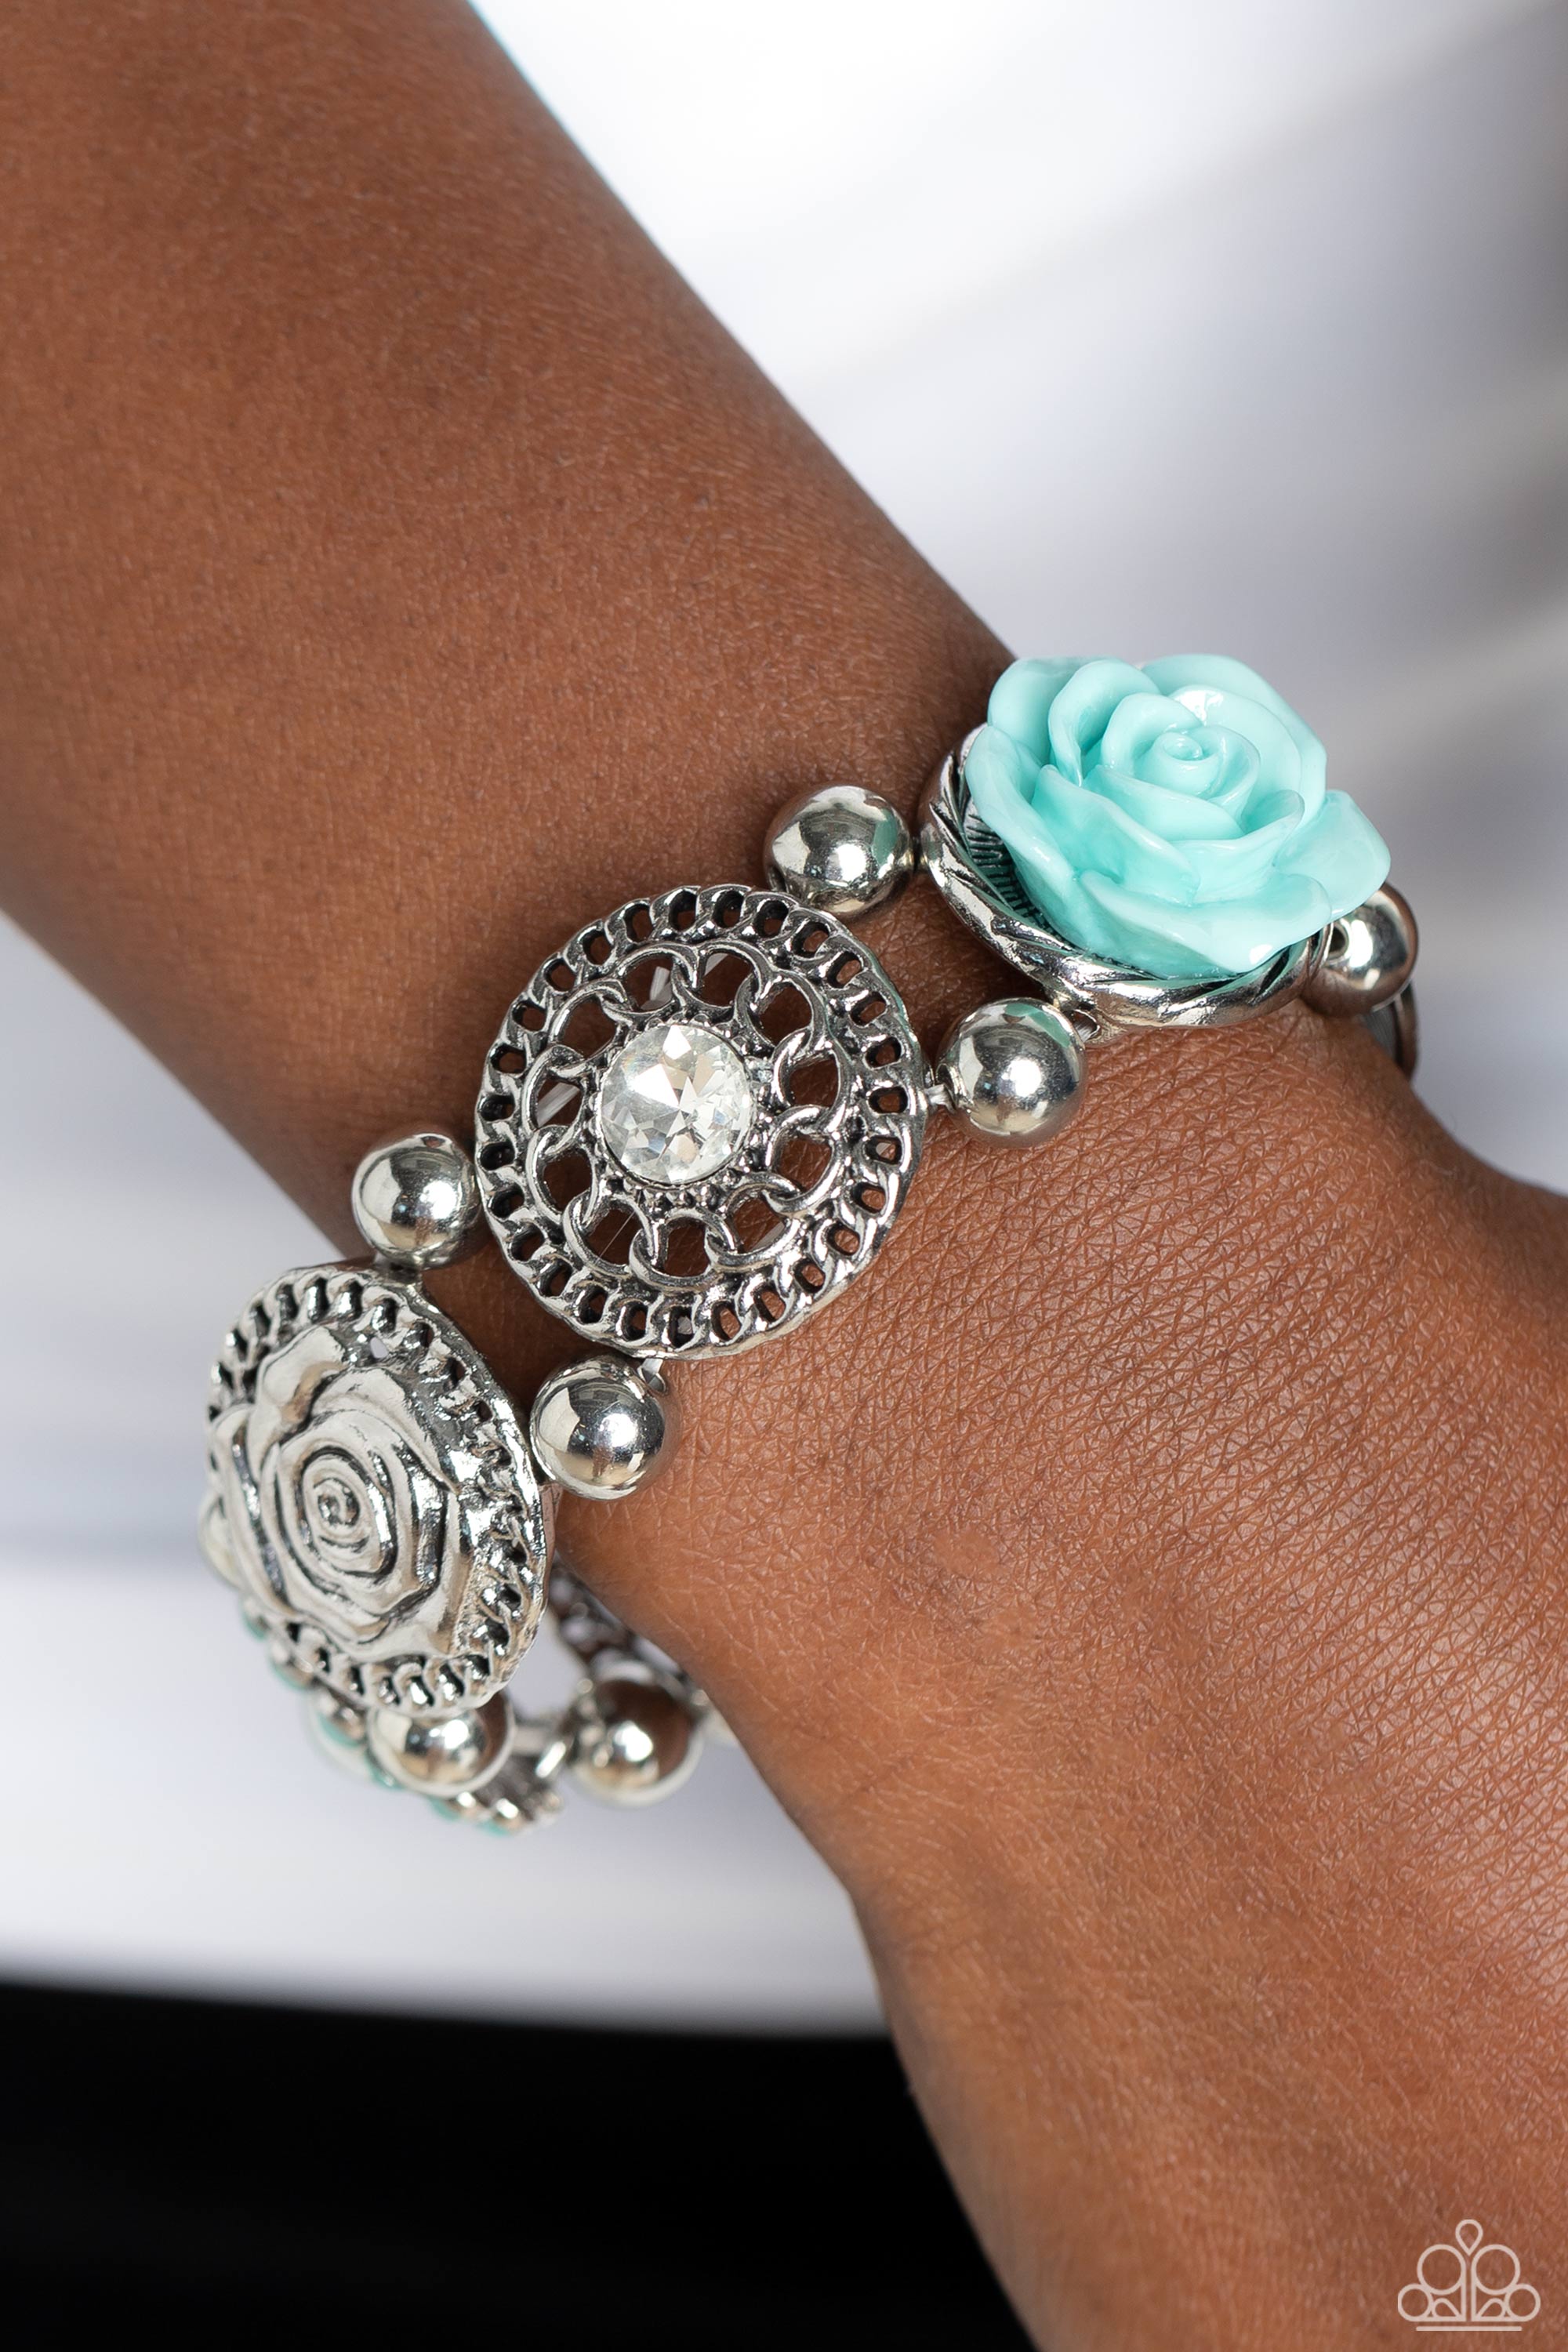 Optimistic Oasis Blue Rose Flower Bracelet - Paparazzi Accessories- lightbox - CarasShop.com - $5 Jewelry by Cara Jewels